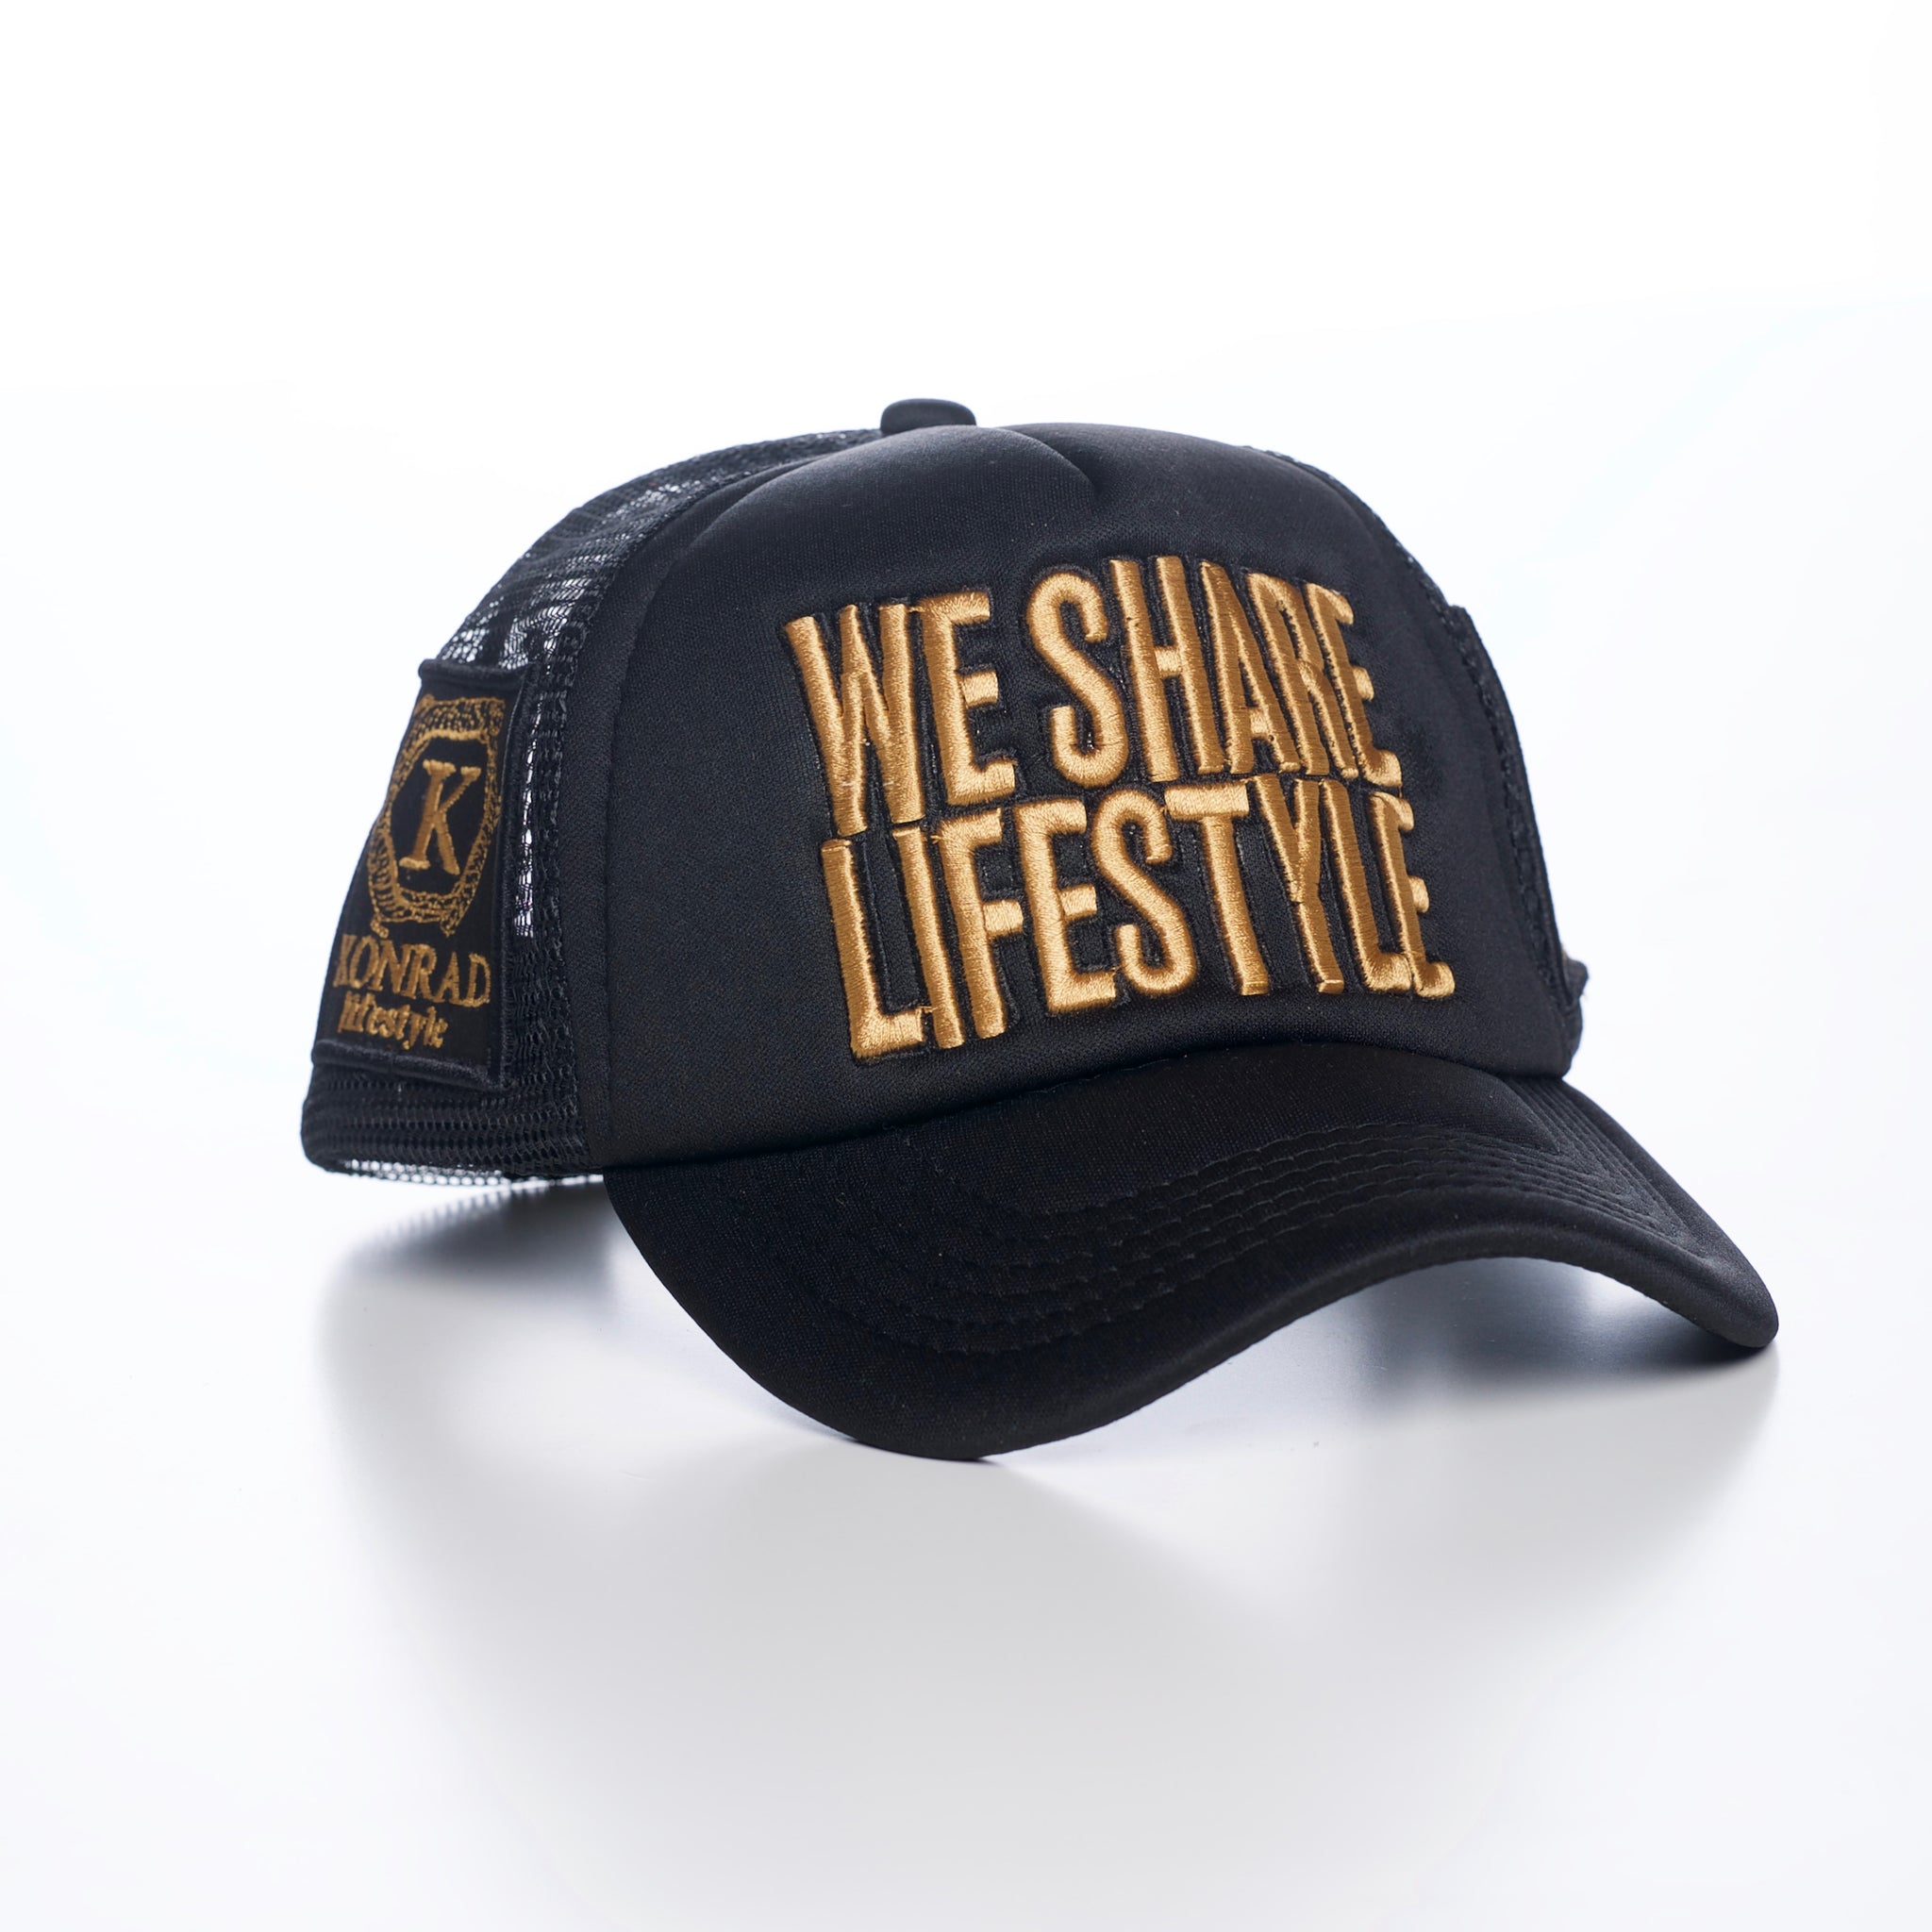 KONRAD LIFESTYLE CAP "WE SHARE LIFESTYLE" GOLD